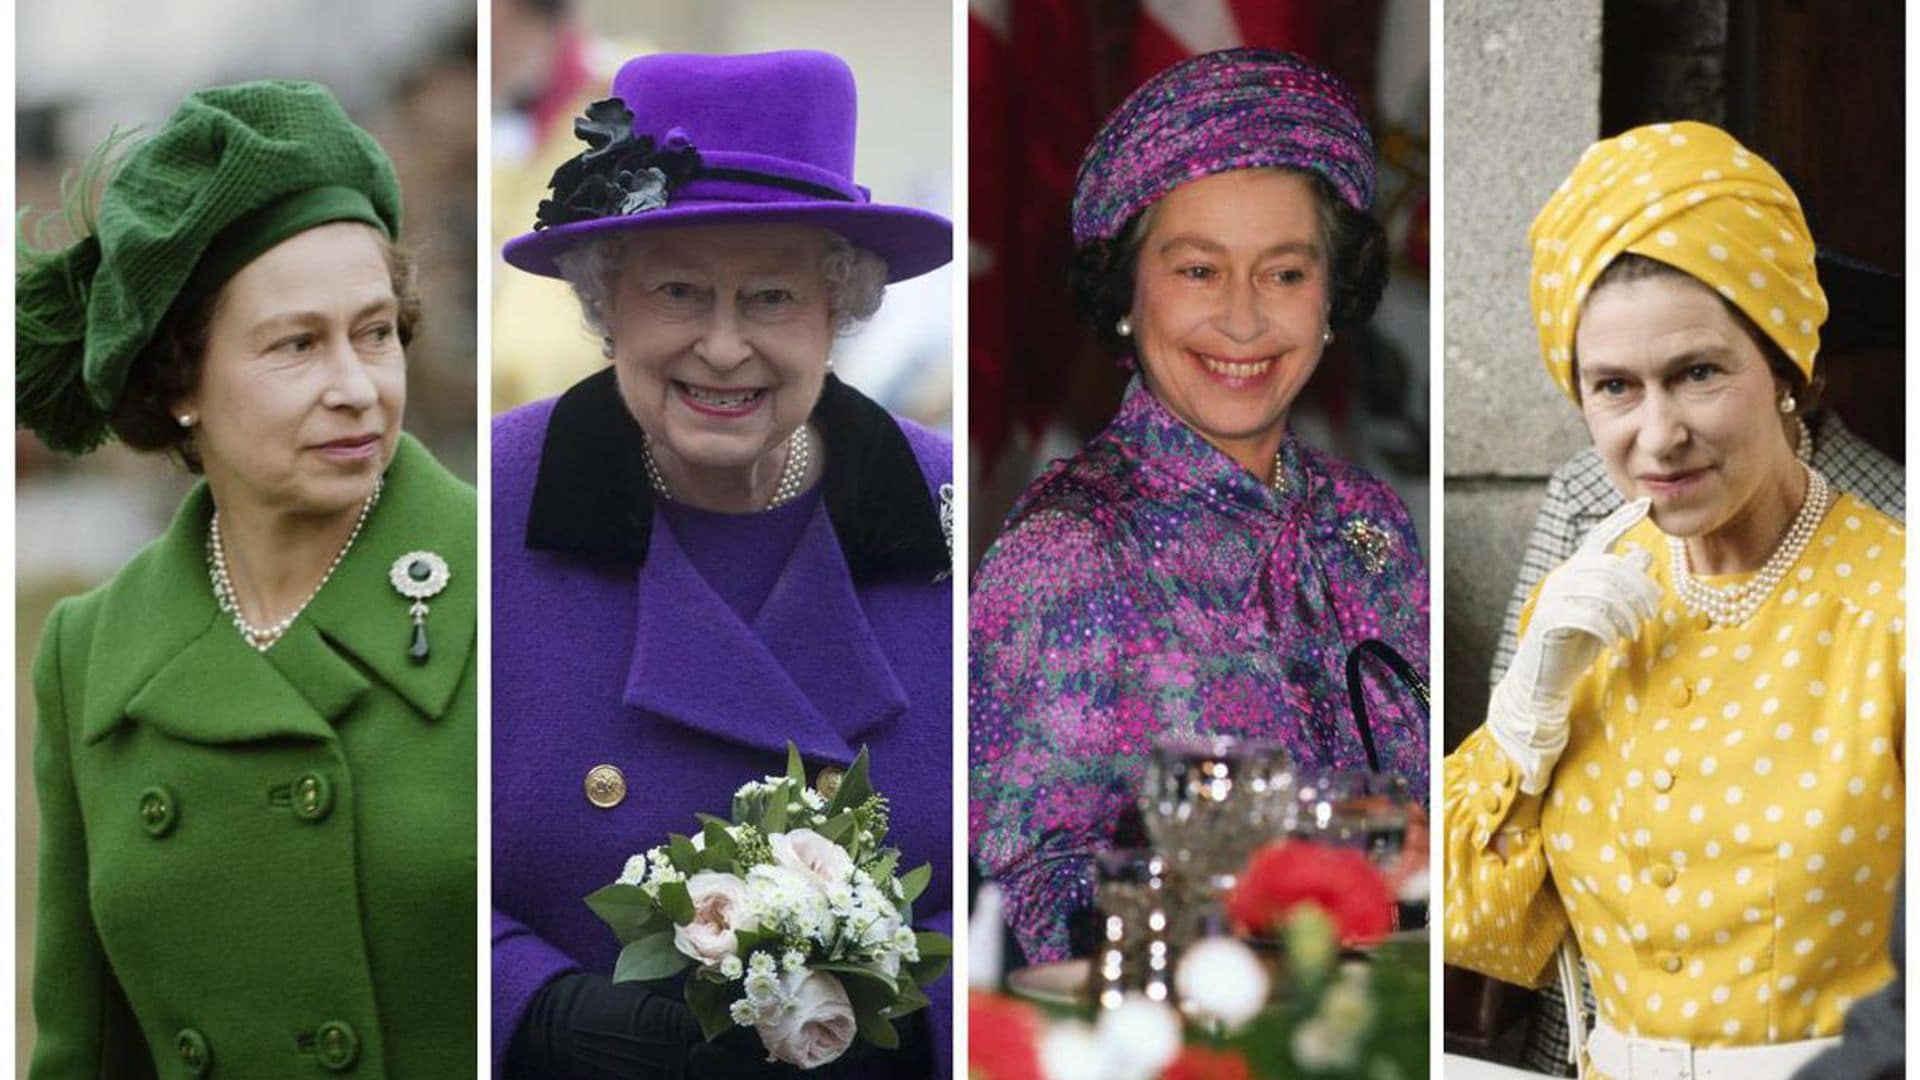 Queen Elizabeth II's favorite styles of hats through the years